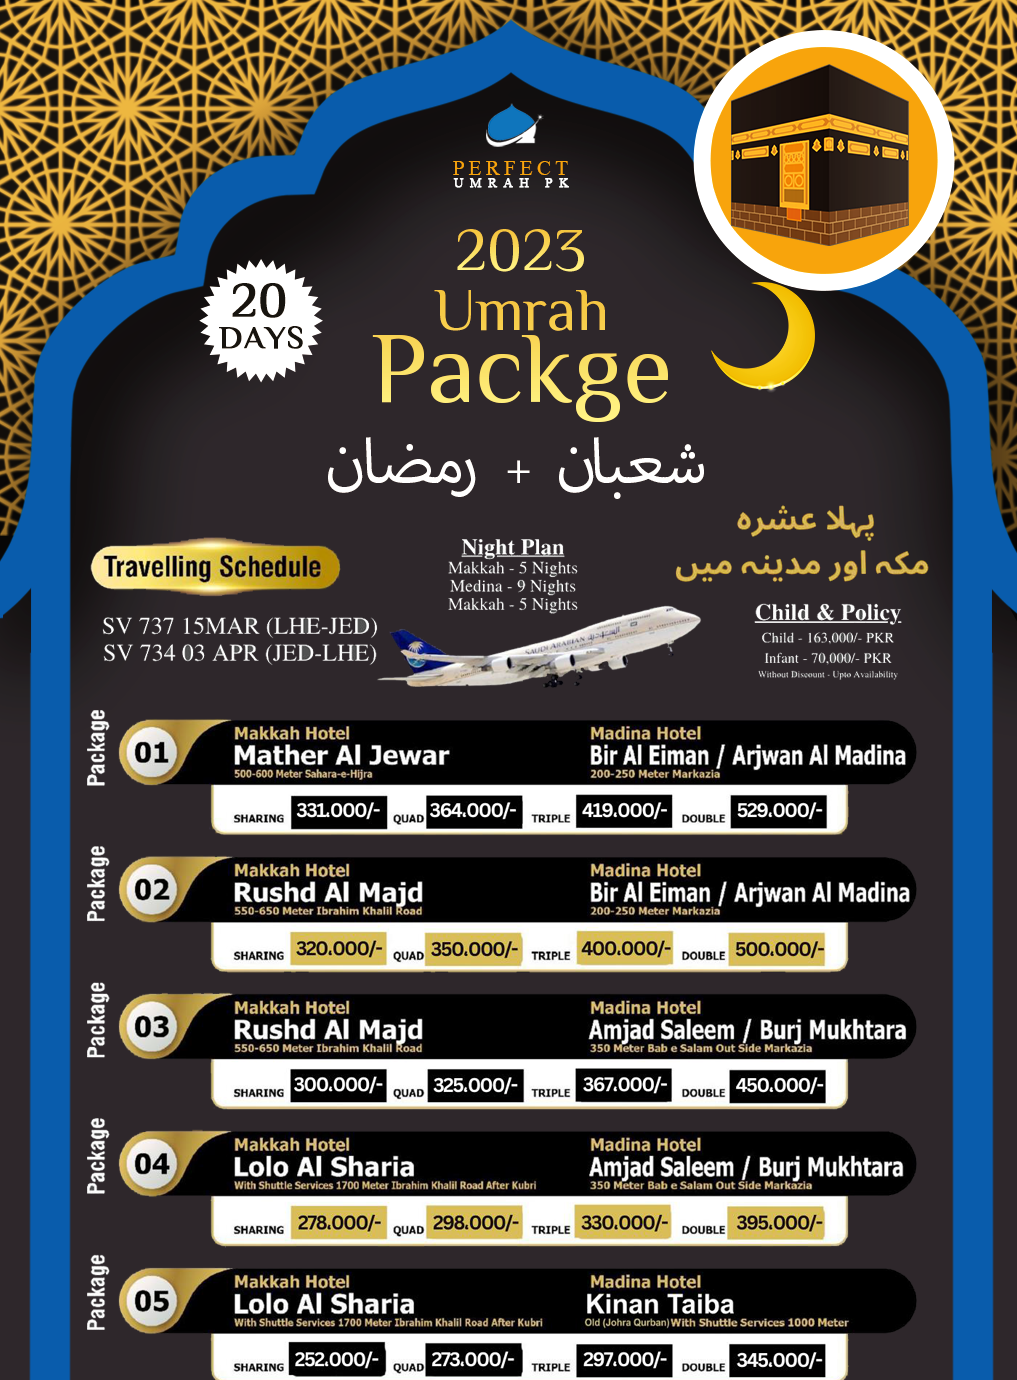 halijah travel umrah package 2023